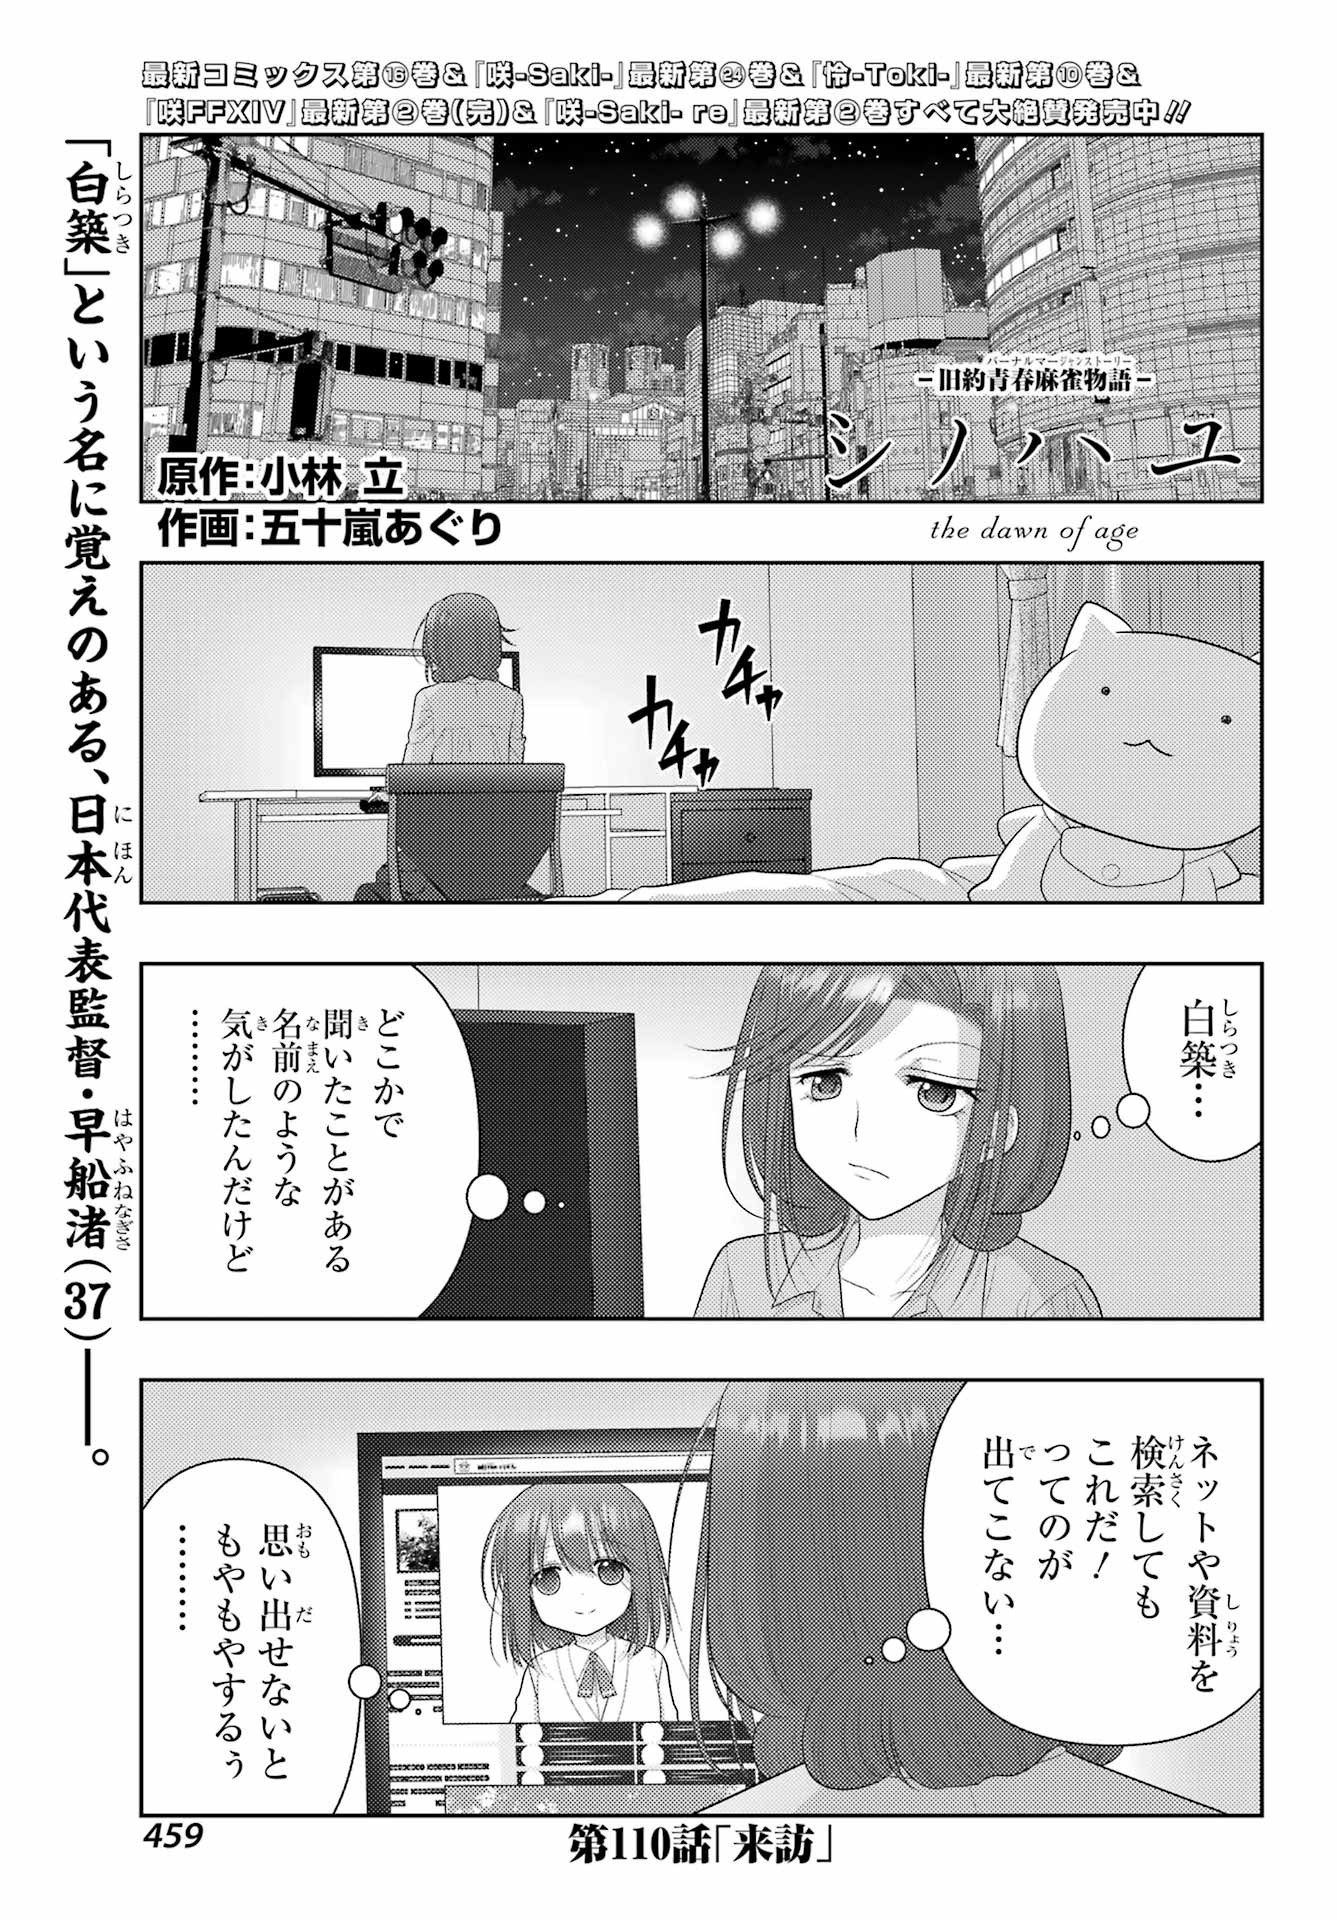 Shinohayu - The Dawn of Age Manga - Chapter 110 - Page 1